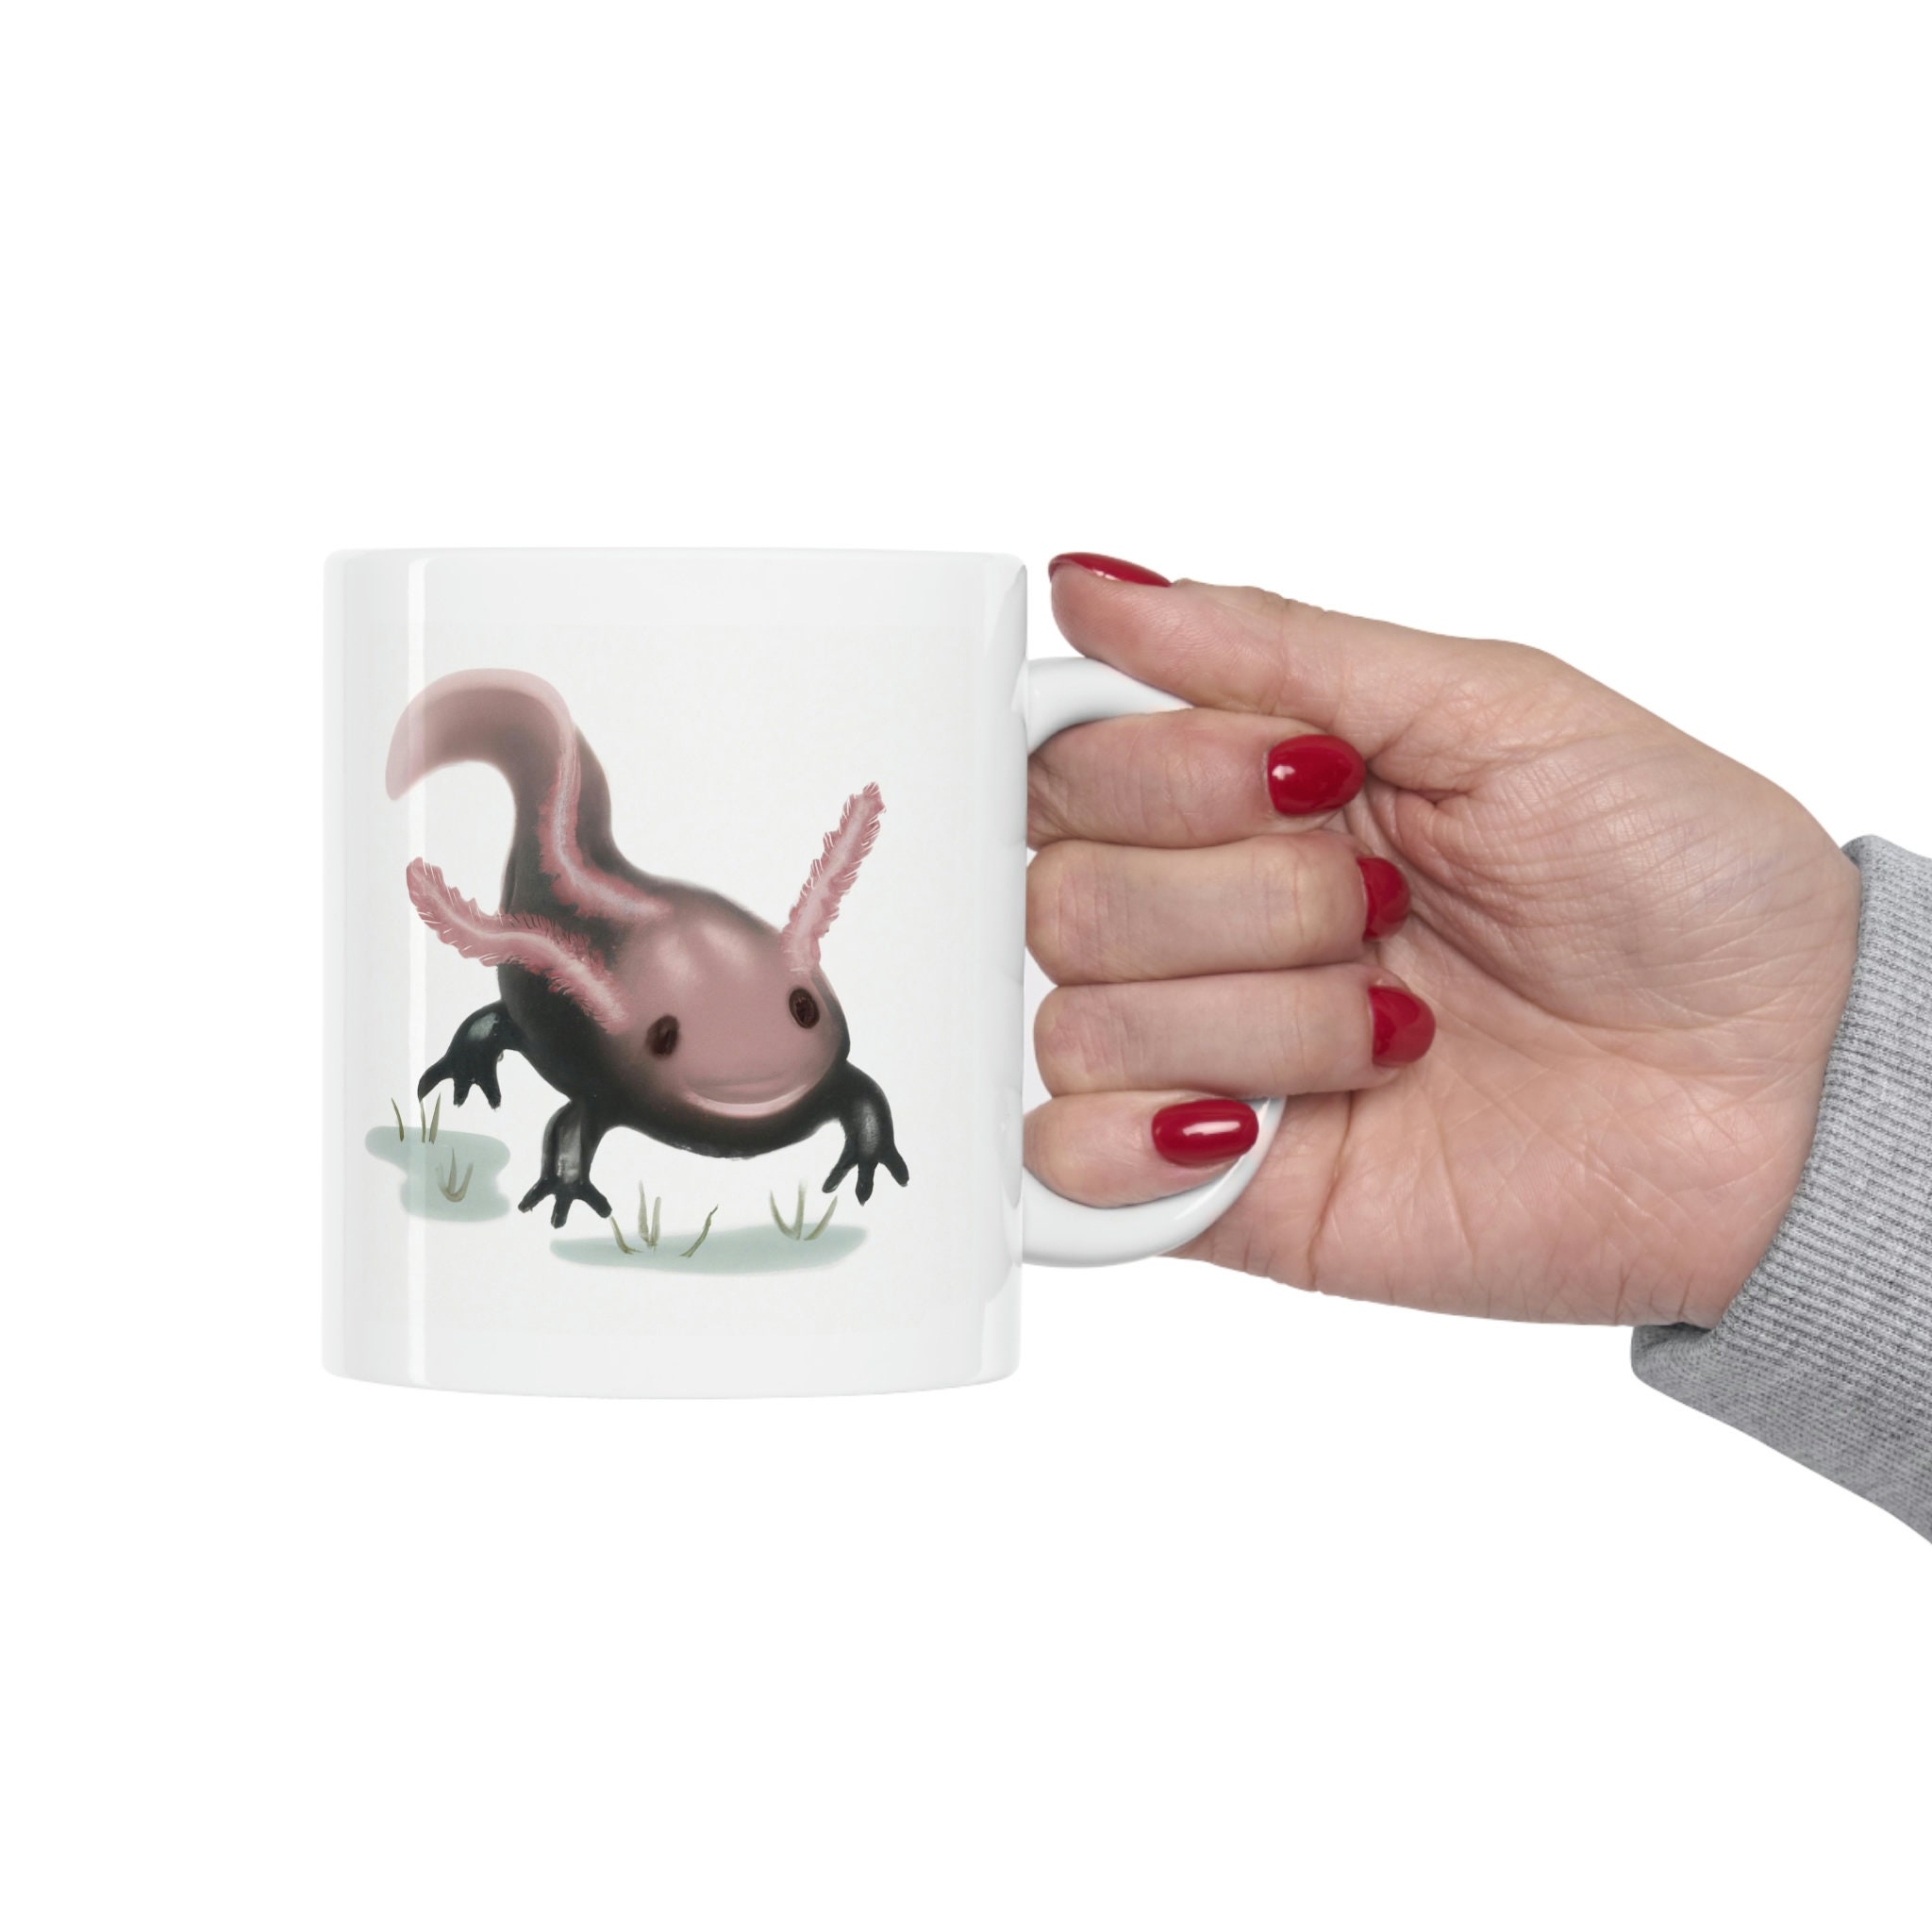 Ask Me About My Axolotl Cute Salamander White 11oz Ceramic Mug